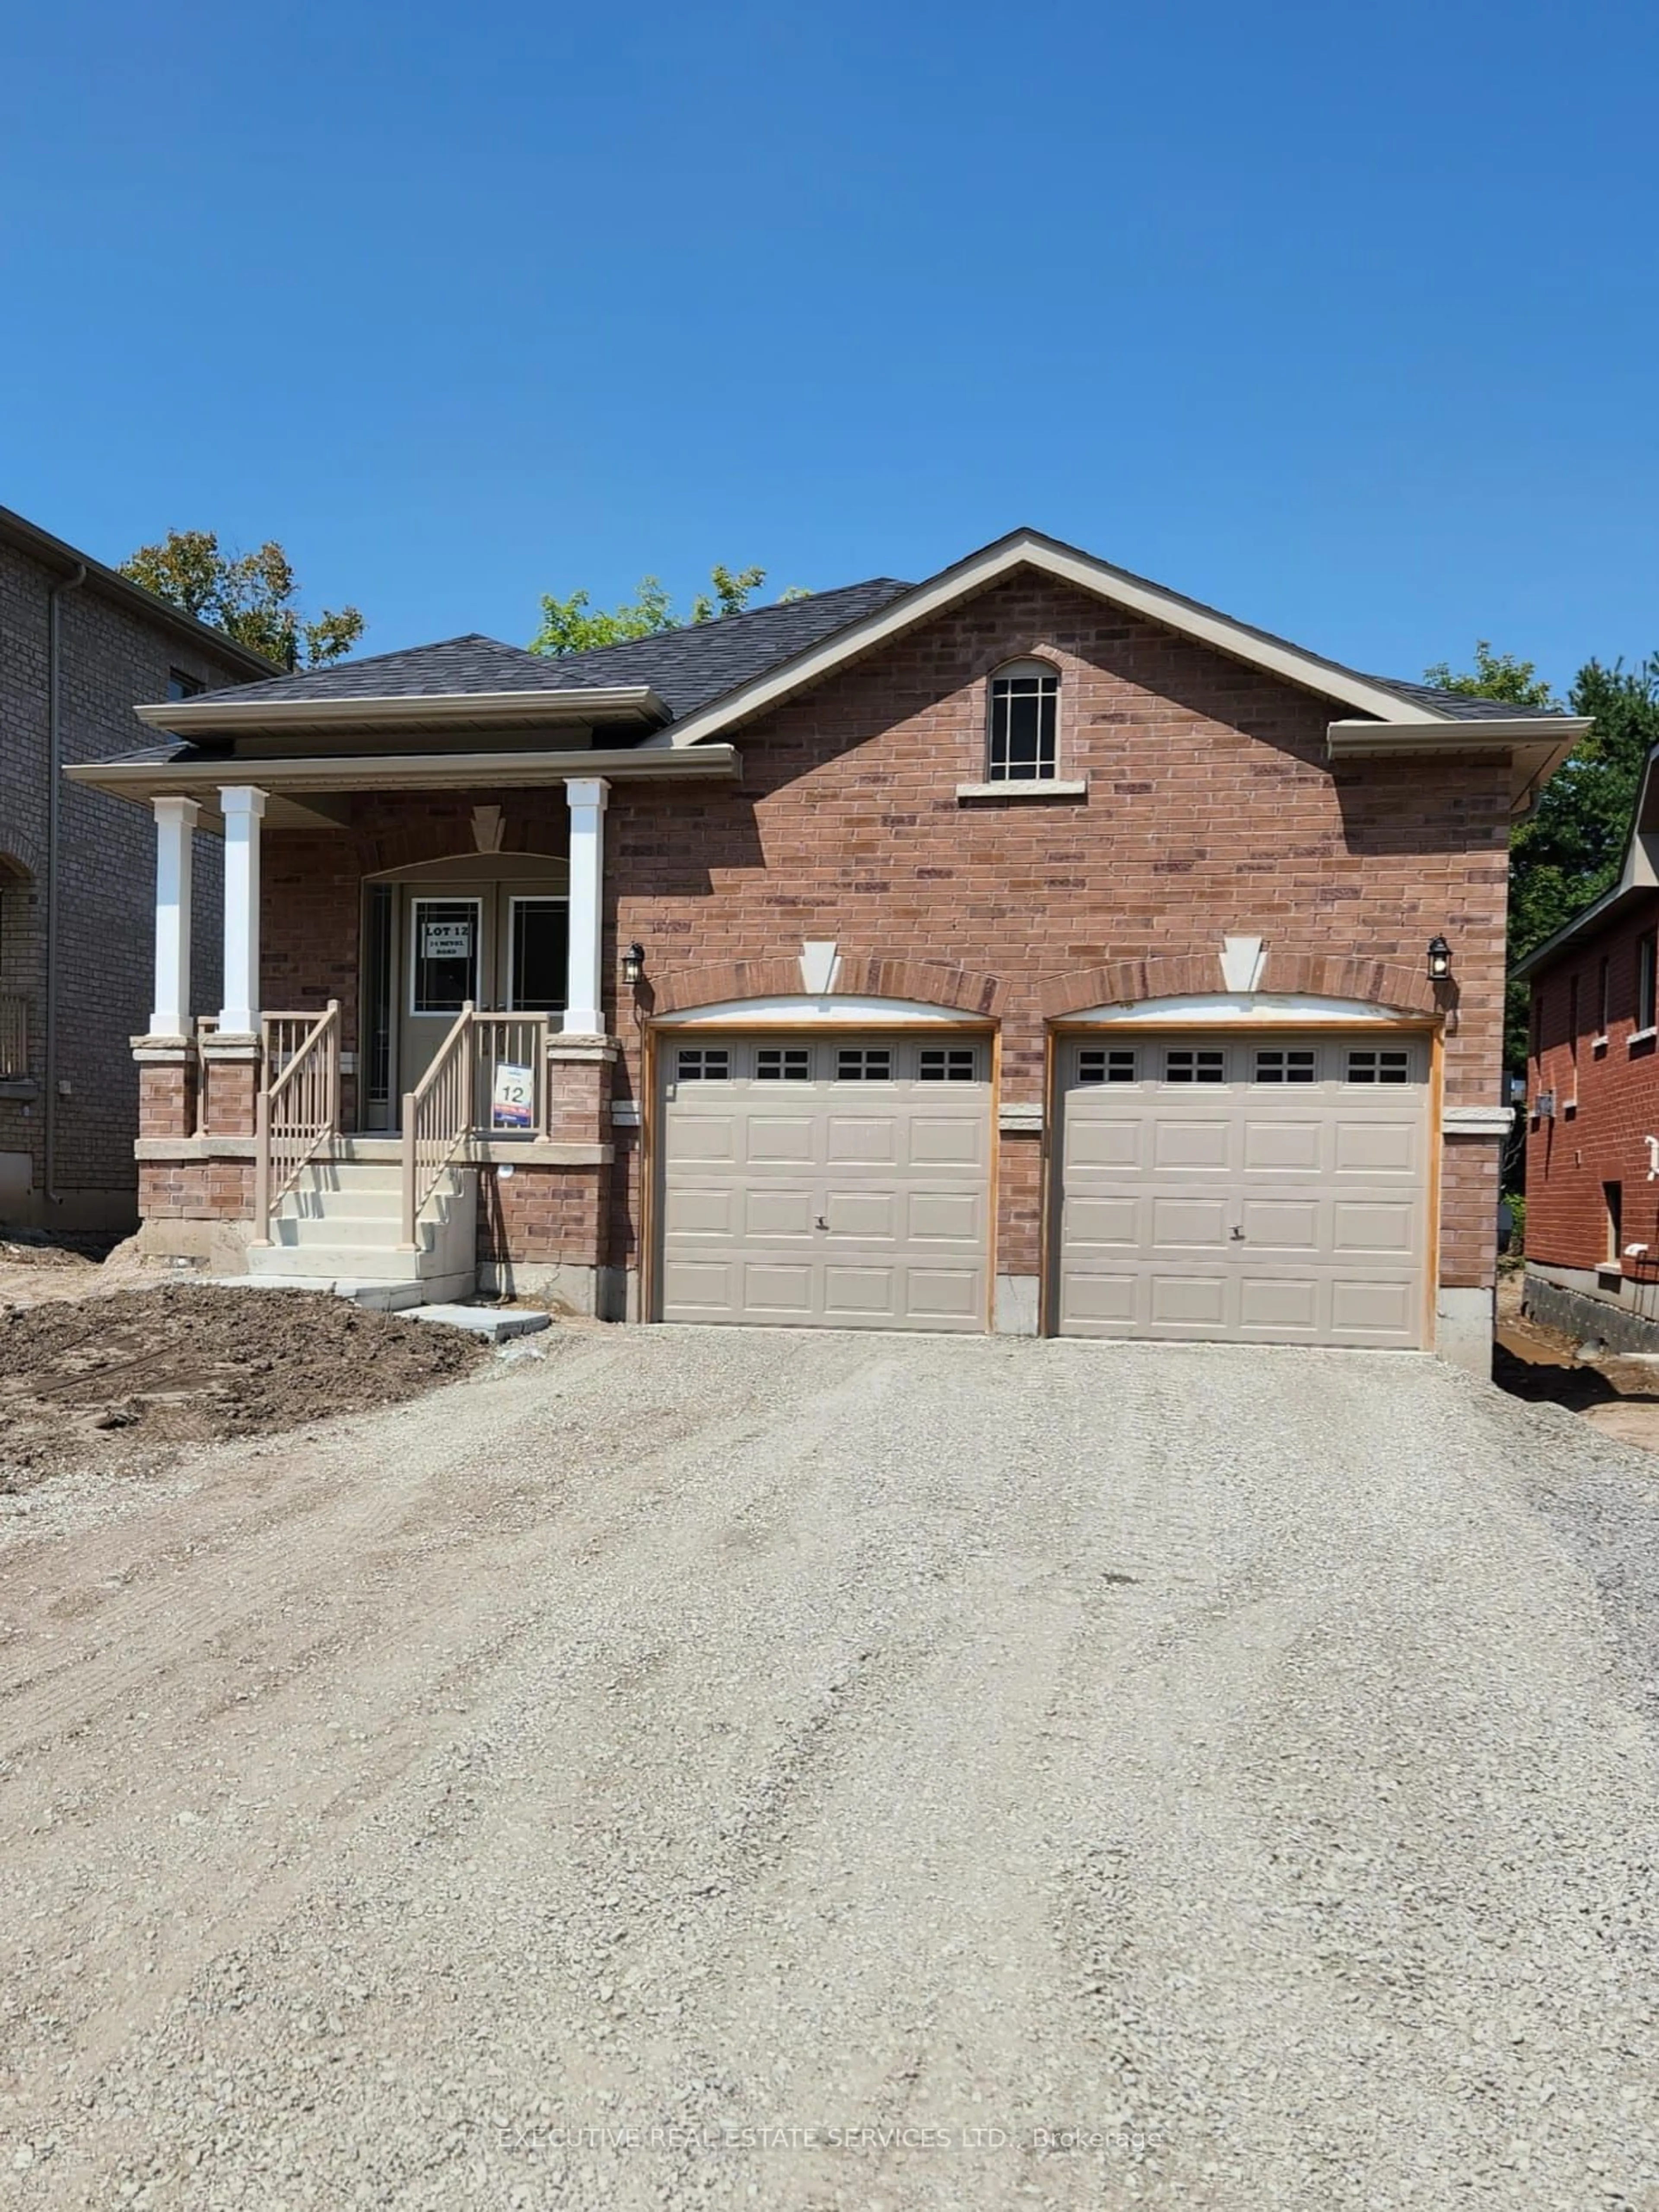 Home with brick exterior material for 24 Revol Rd, Penetanguishene Ontario L9M 1N8